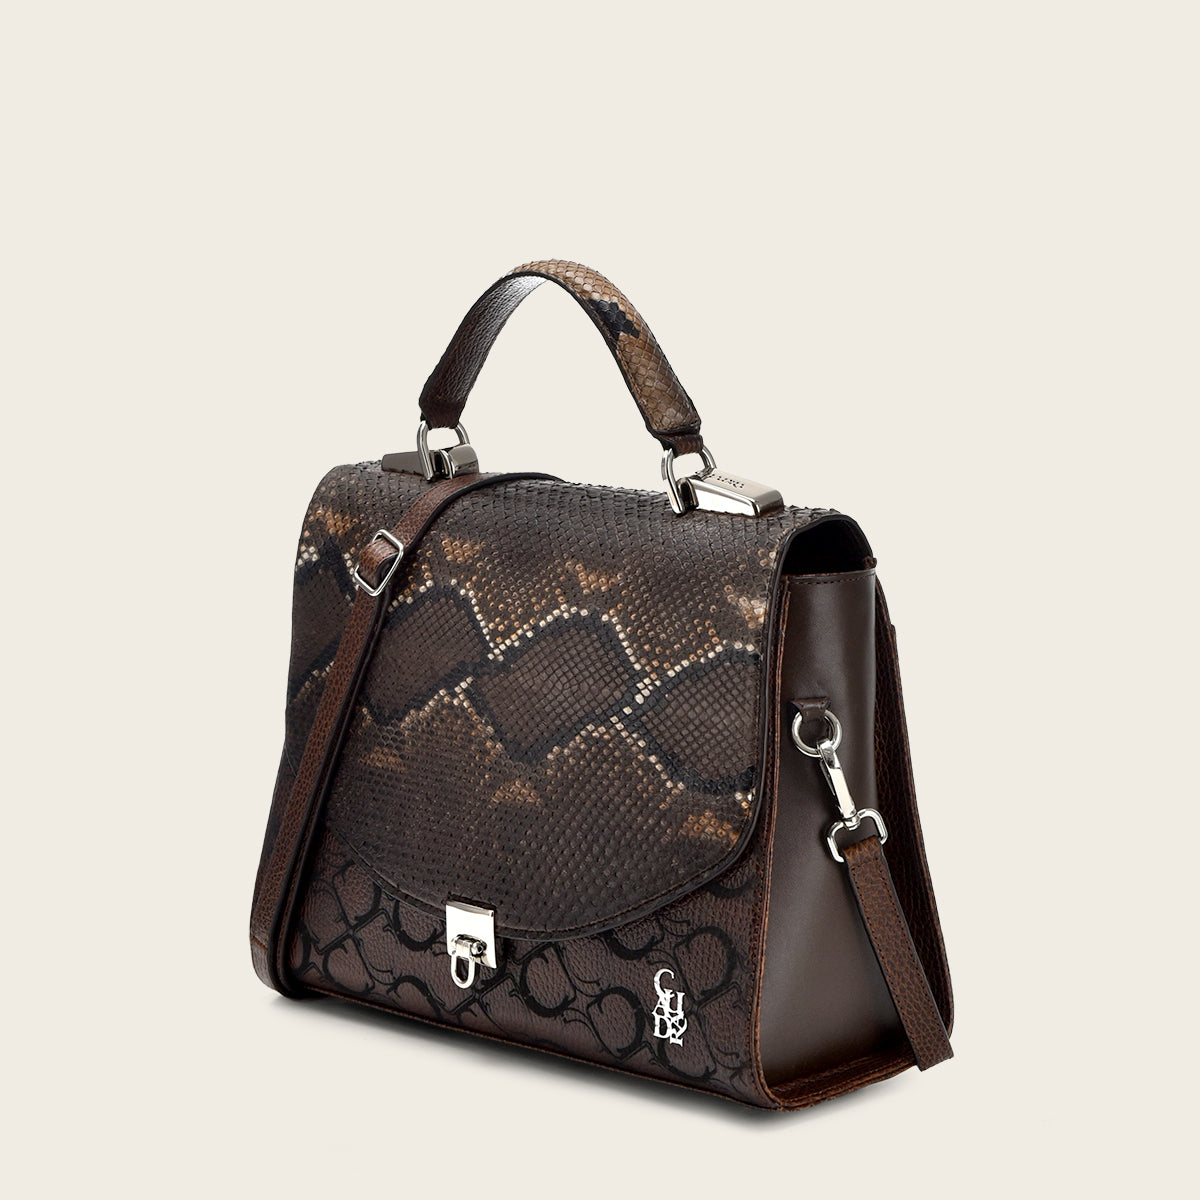 Dark brown exotic leather handbag with Cuadra Monogram leather